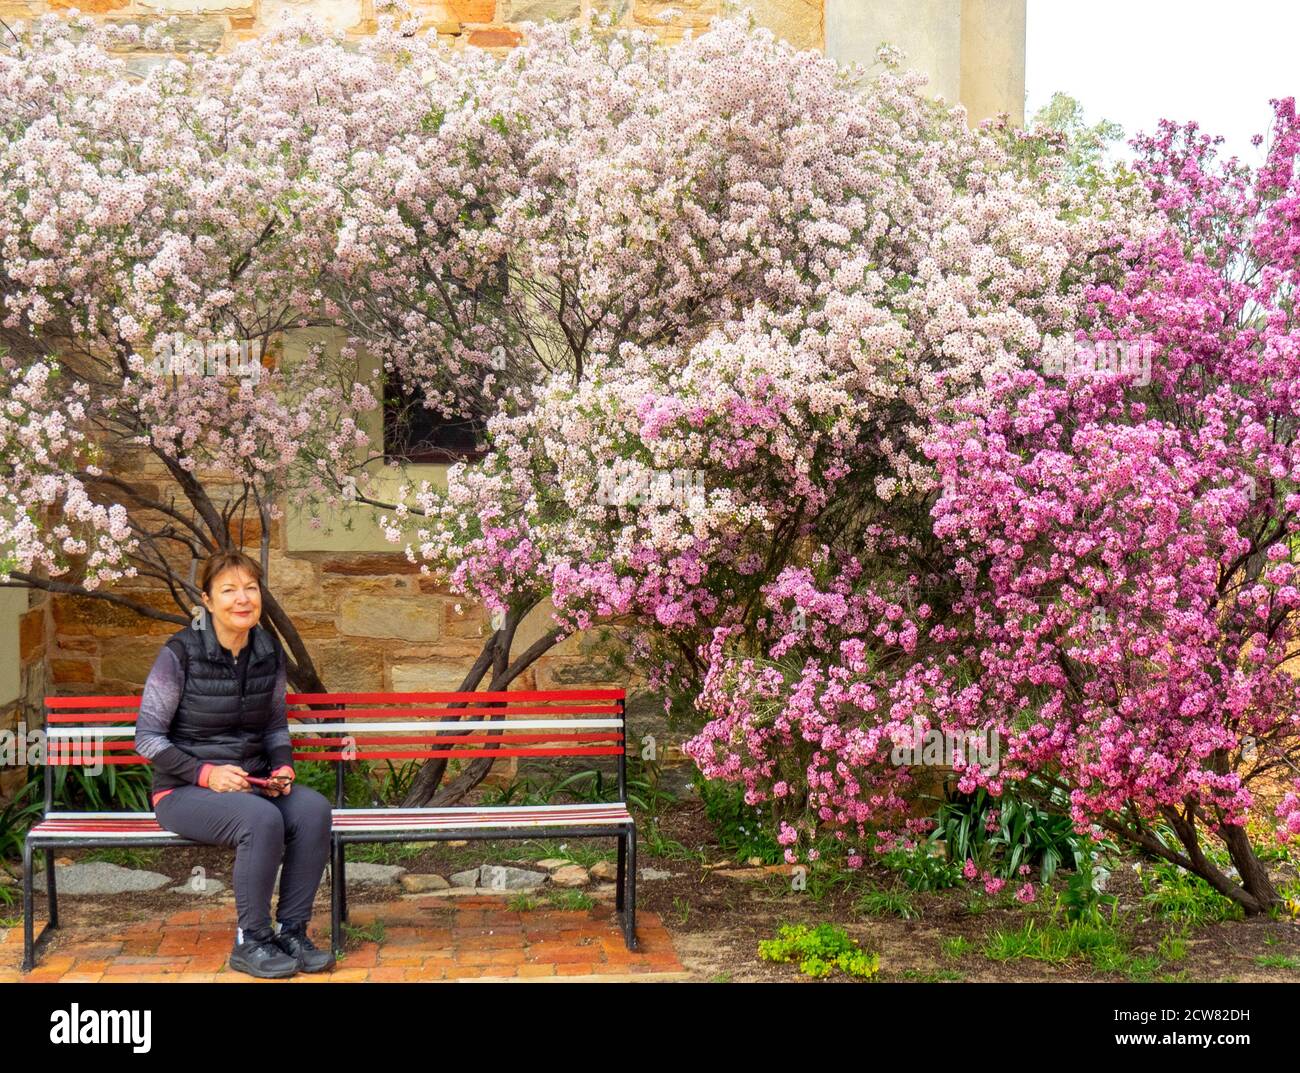 Caucasian woman sitting on bench in a garden with shrubs of flowering native flora Chamelaucium uncinatum Geraldton wax in York Western Australia. Stock Photo